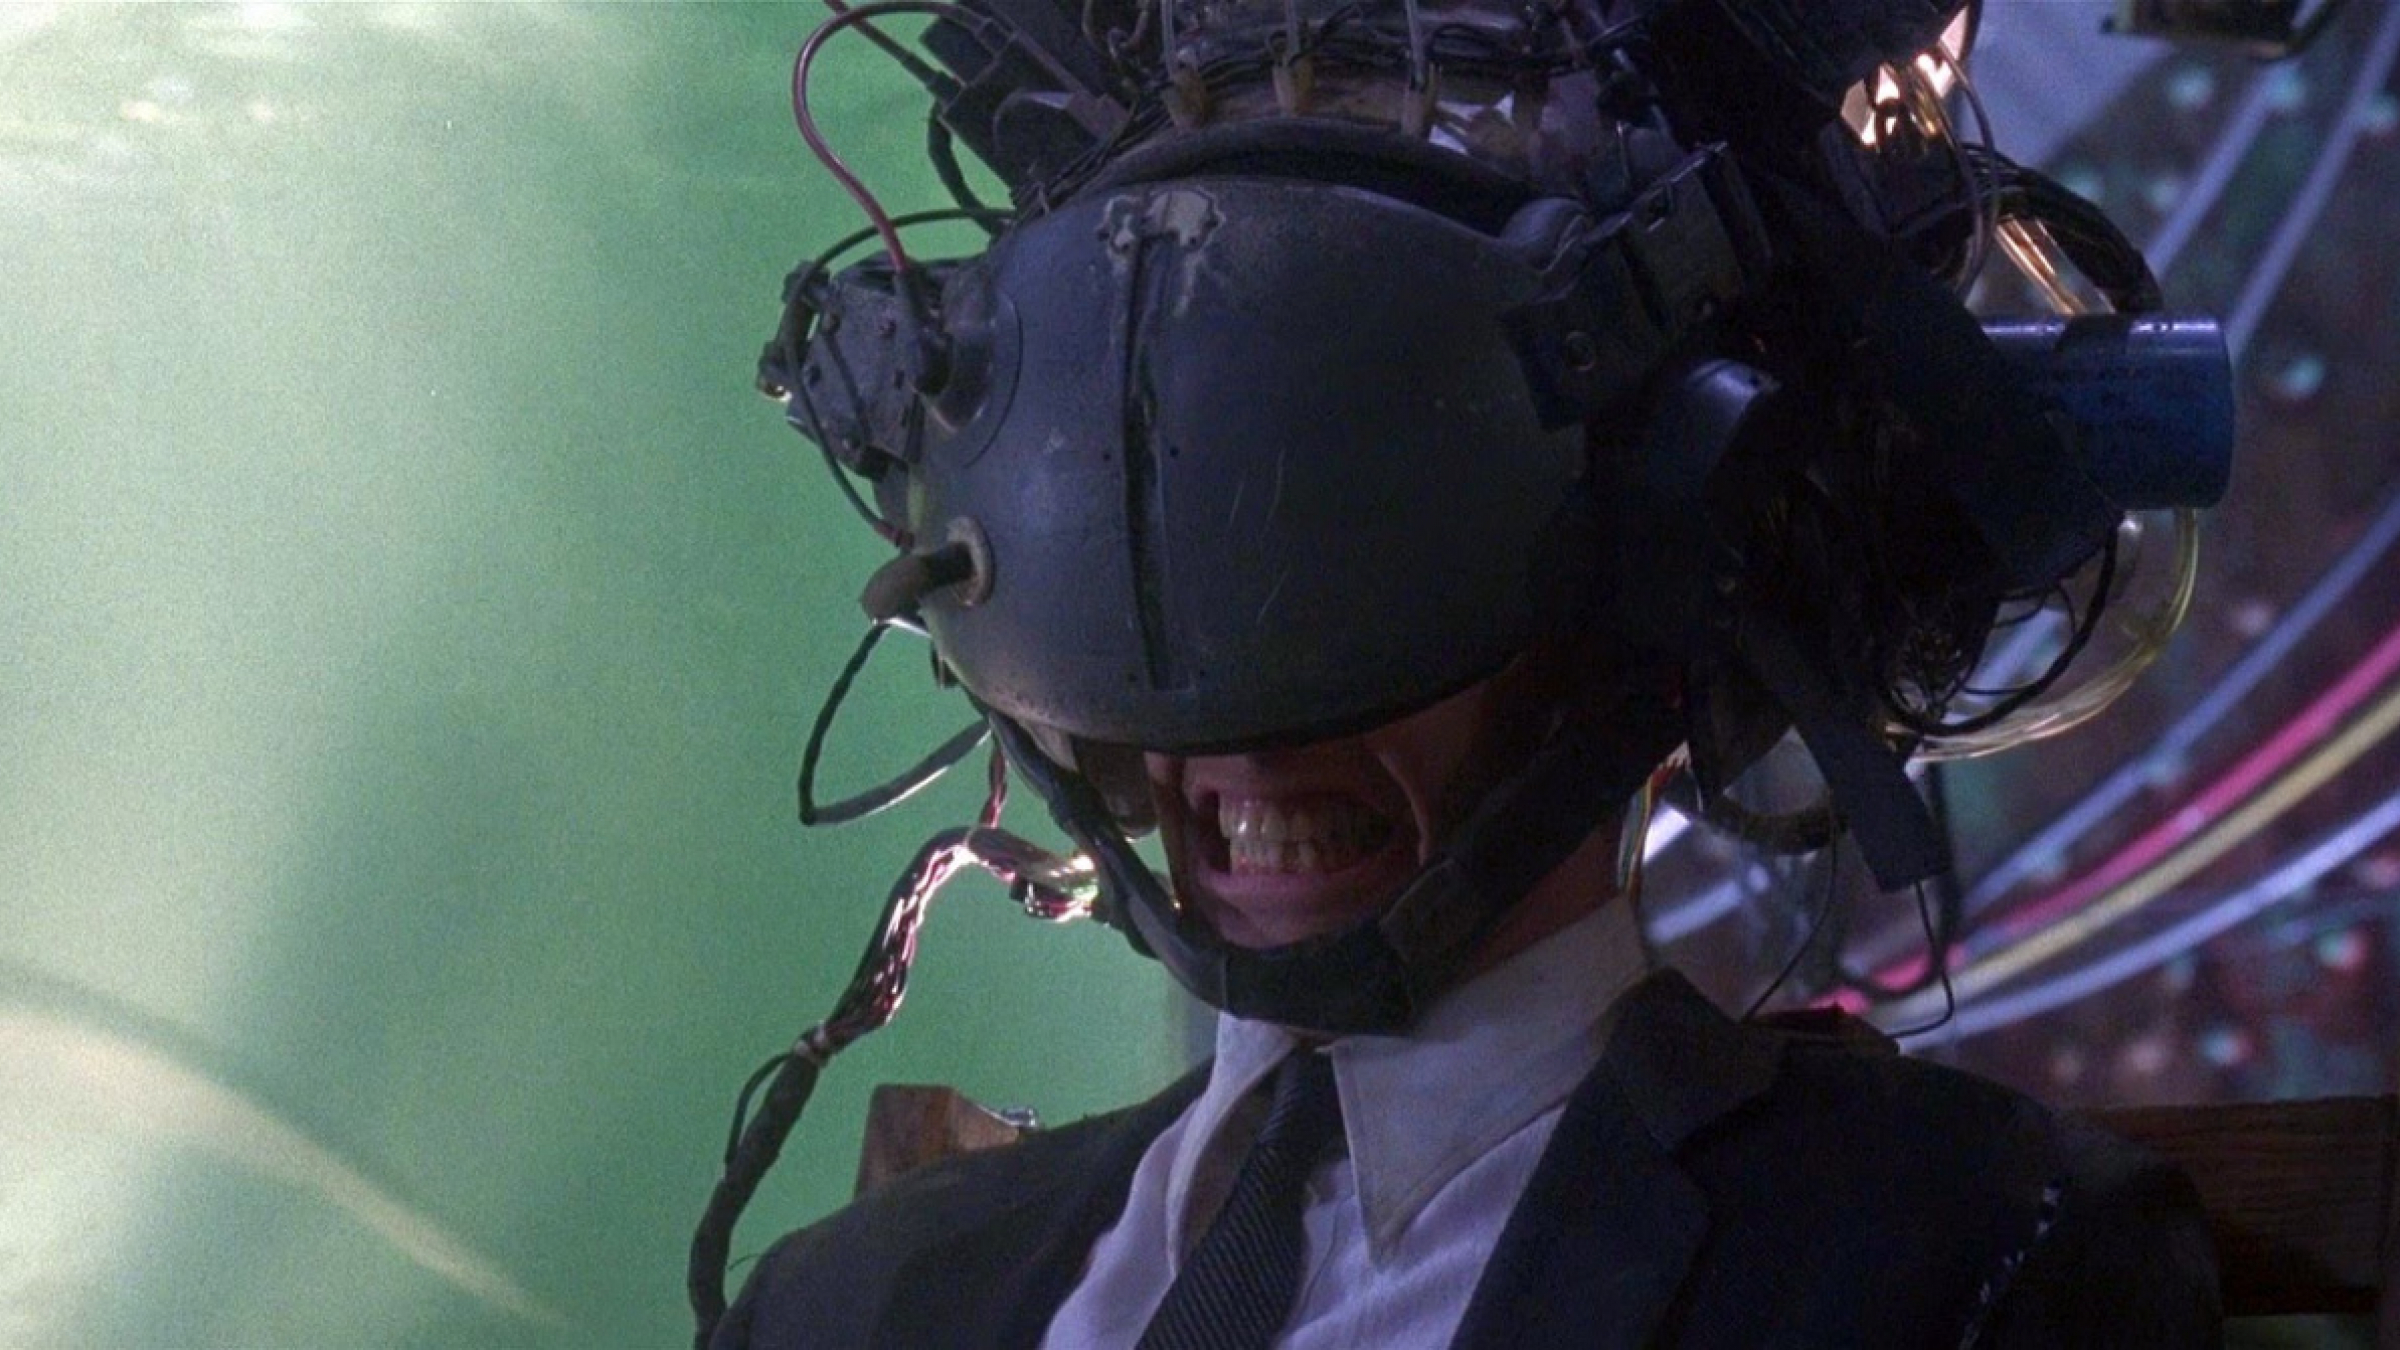 Johnny Mnemonic wearing a cyberpunk device